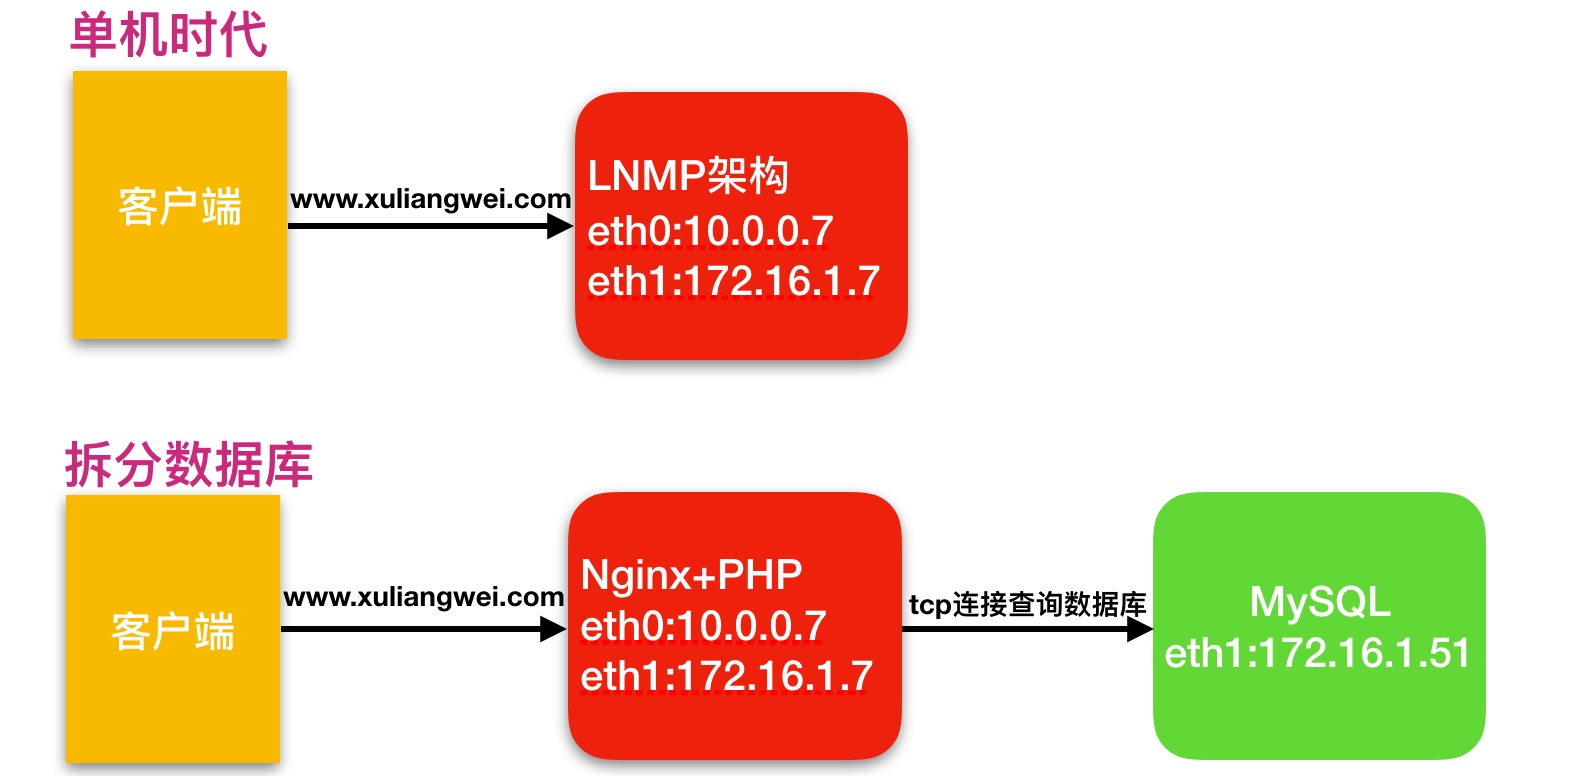 04.Nginx搭建流行架构 - 图18